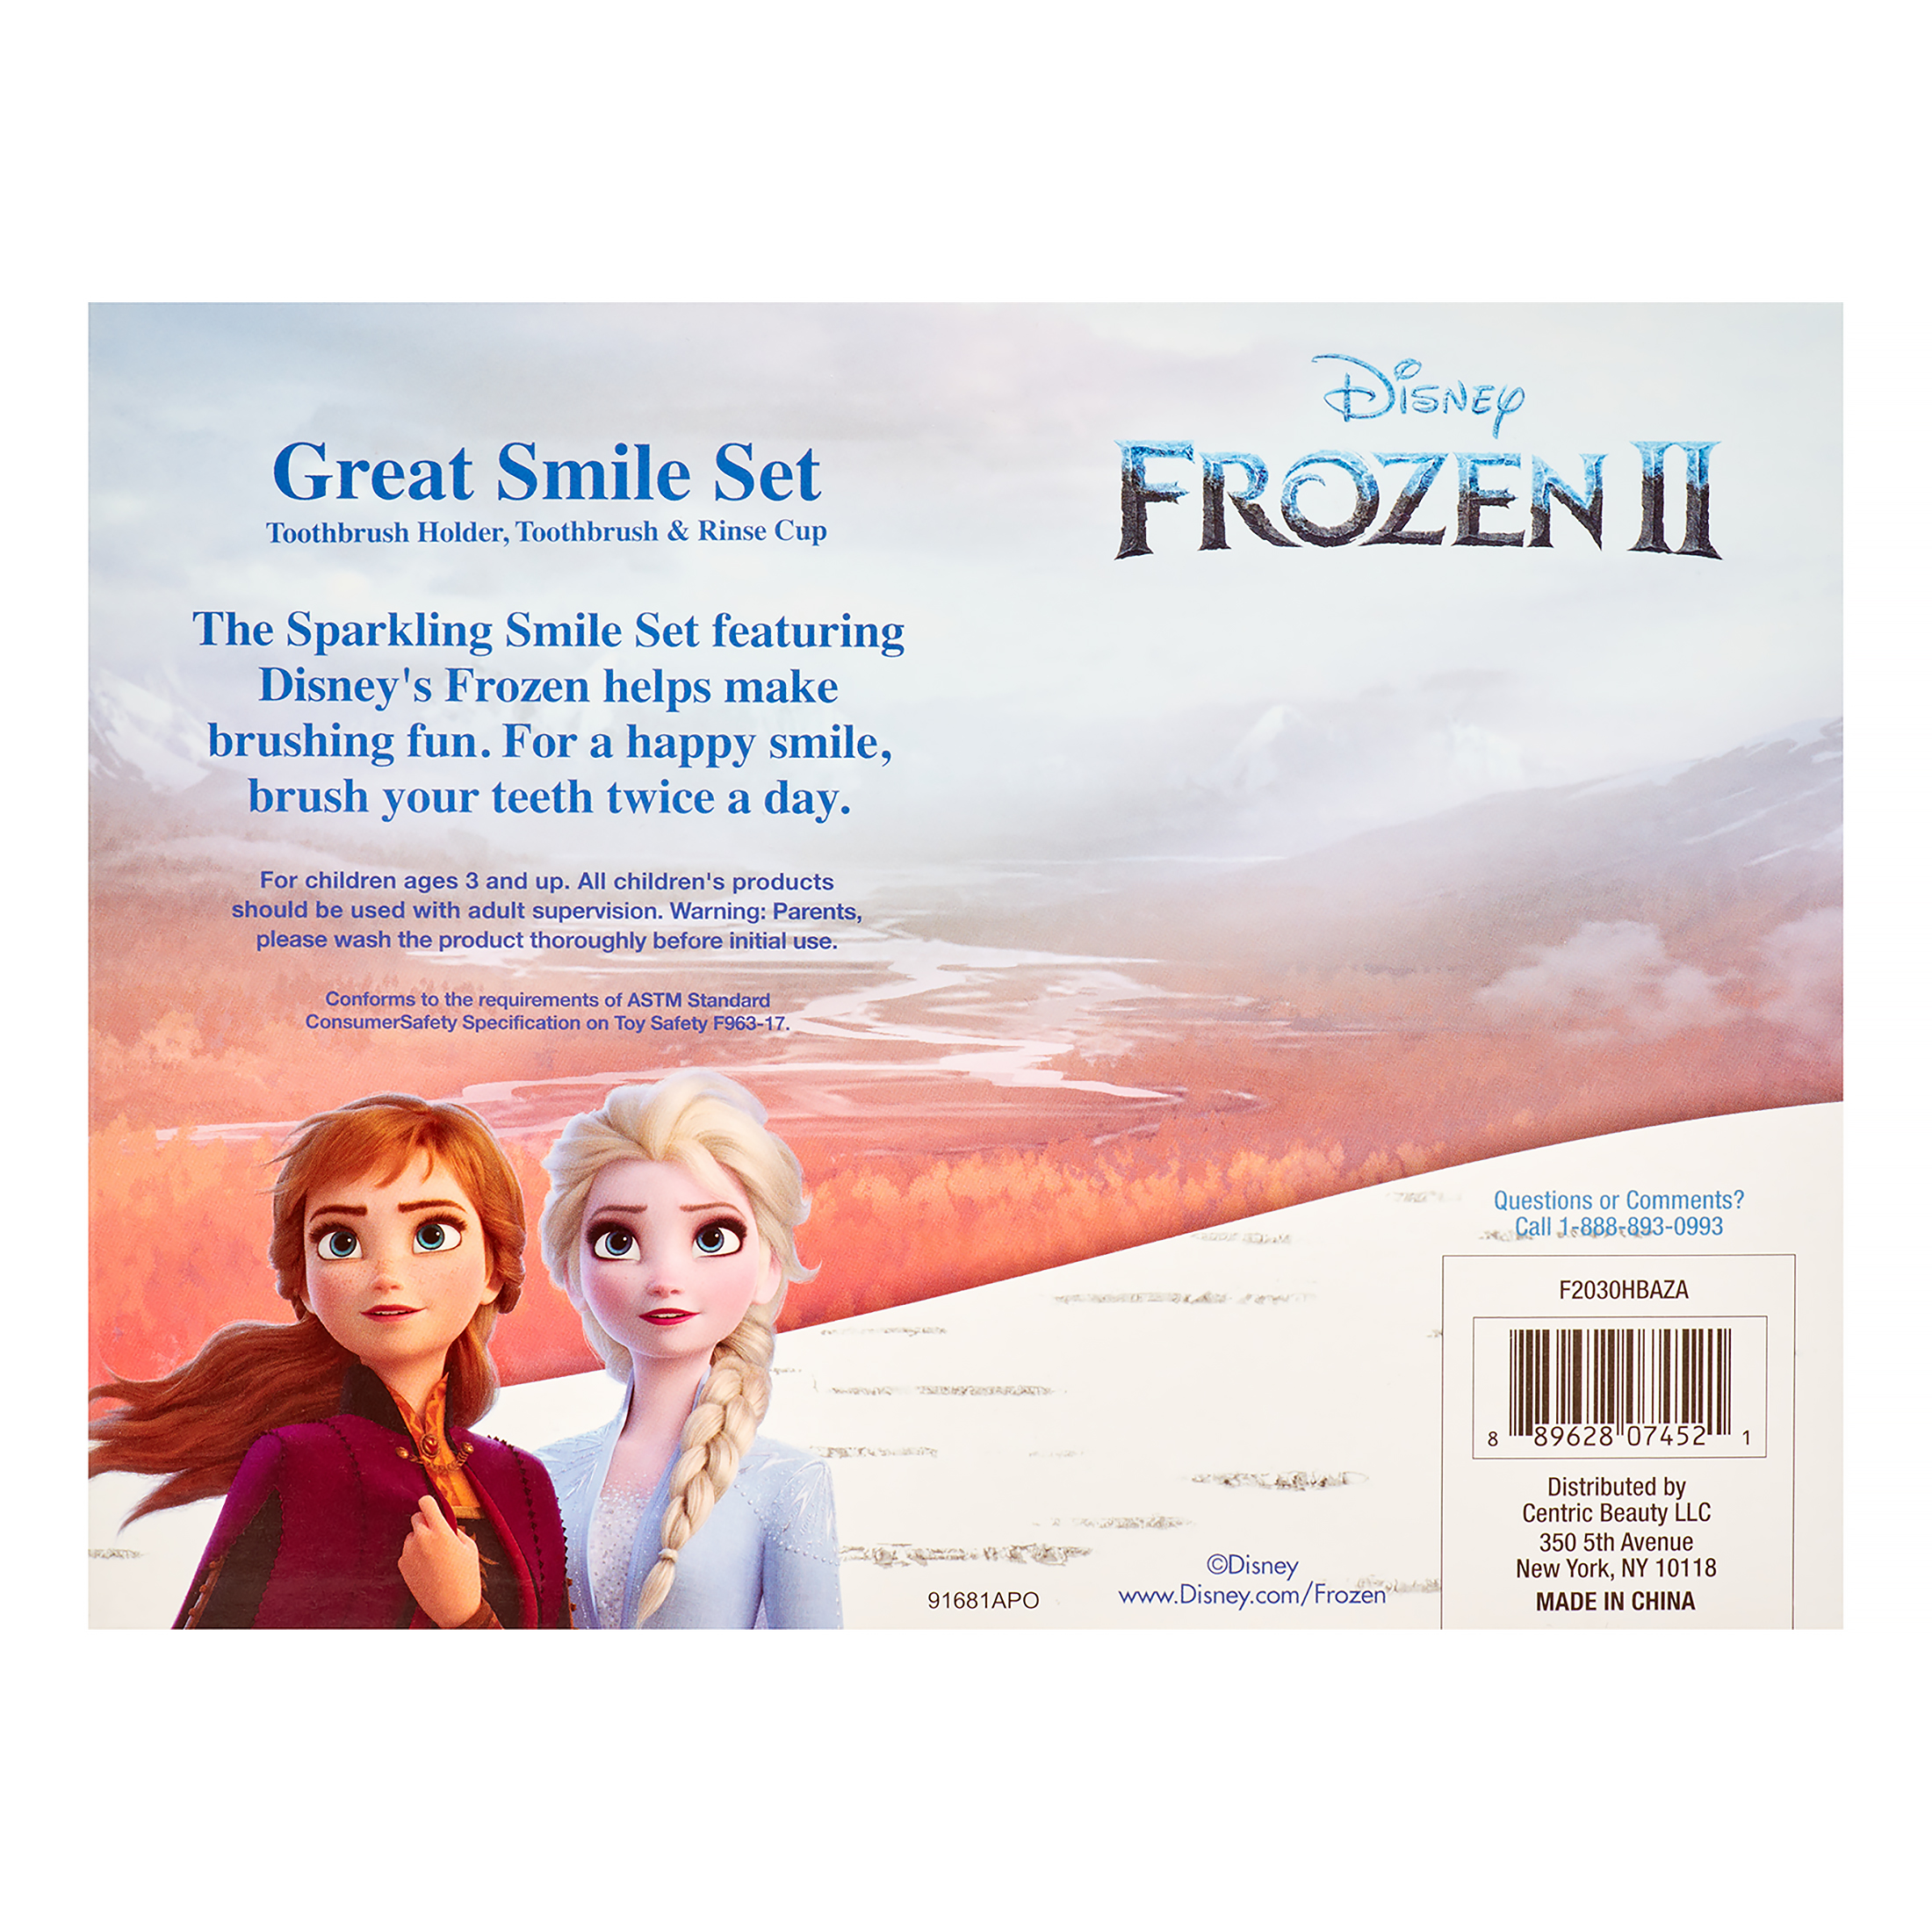 Disney Frozen II 3-Piece Great Smile Elsa Toothbrush and Holder Set - image 5 of 6